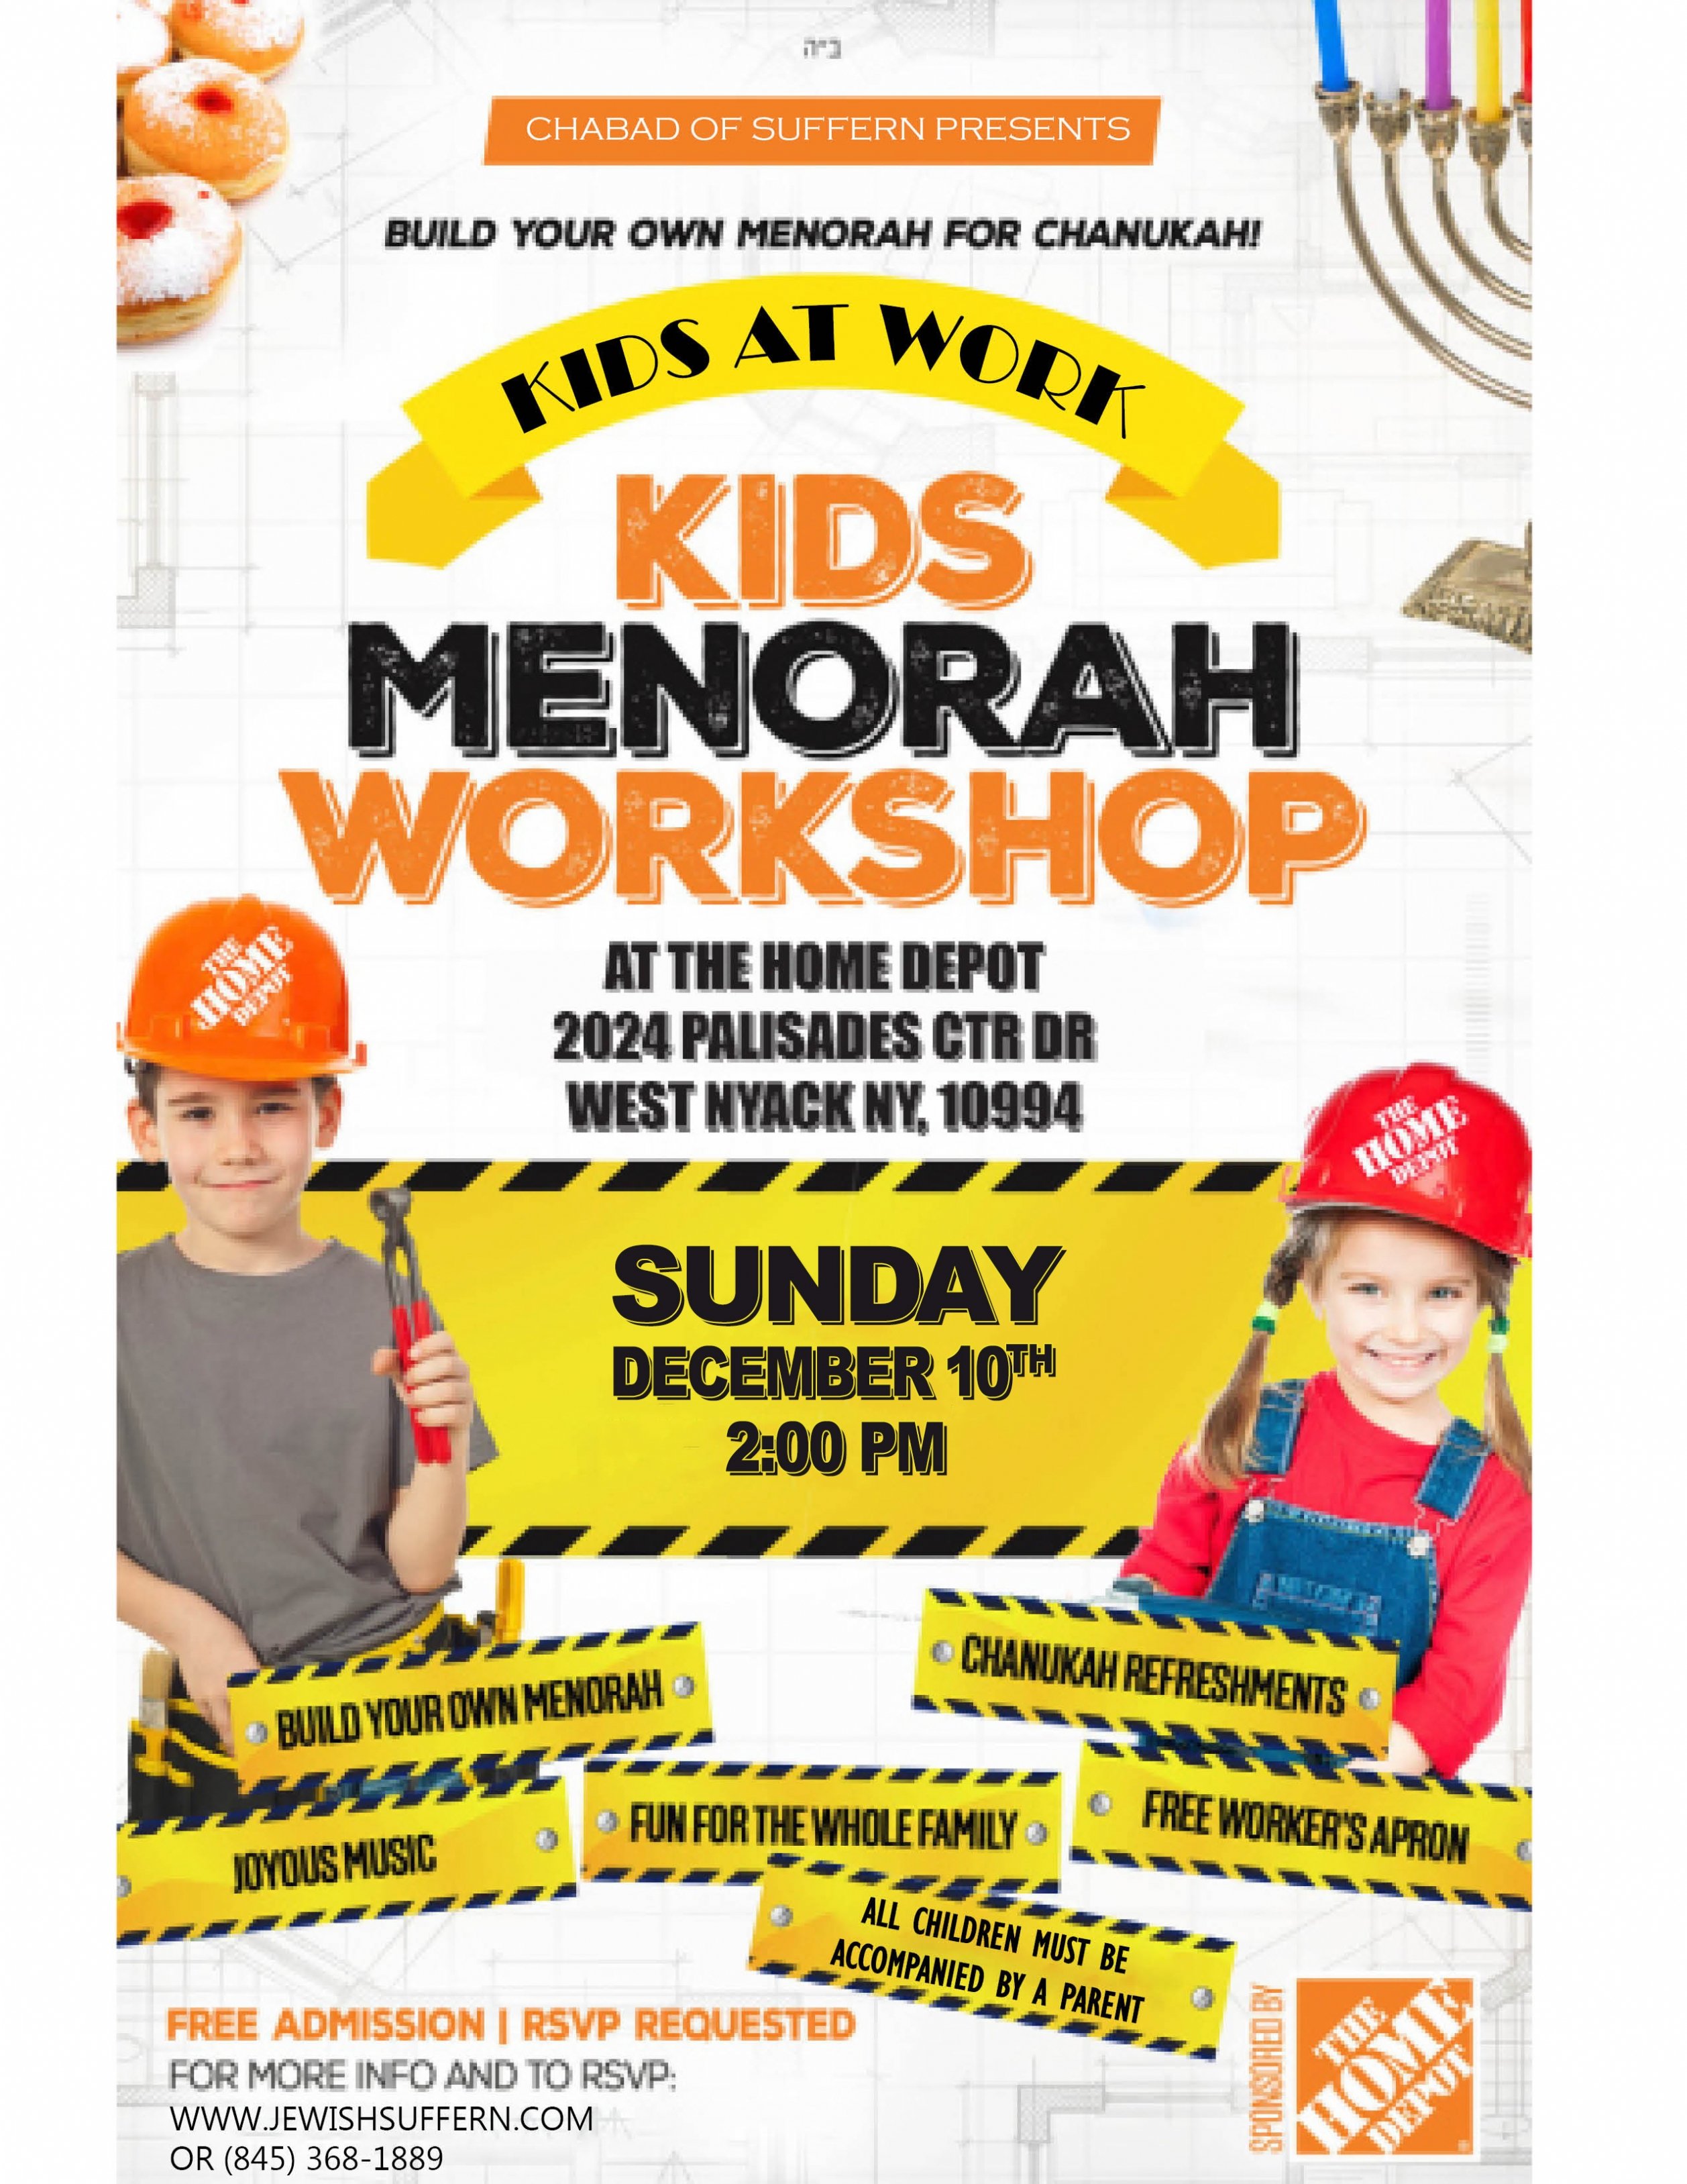 Chanukah Home Depot Workshop - Chabad Jewish Center of Suffern